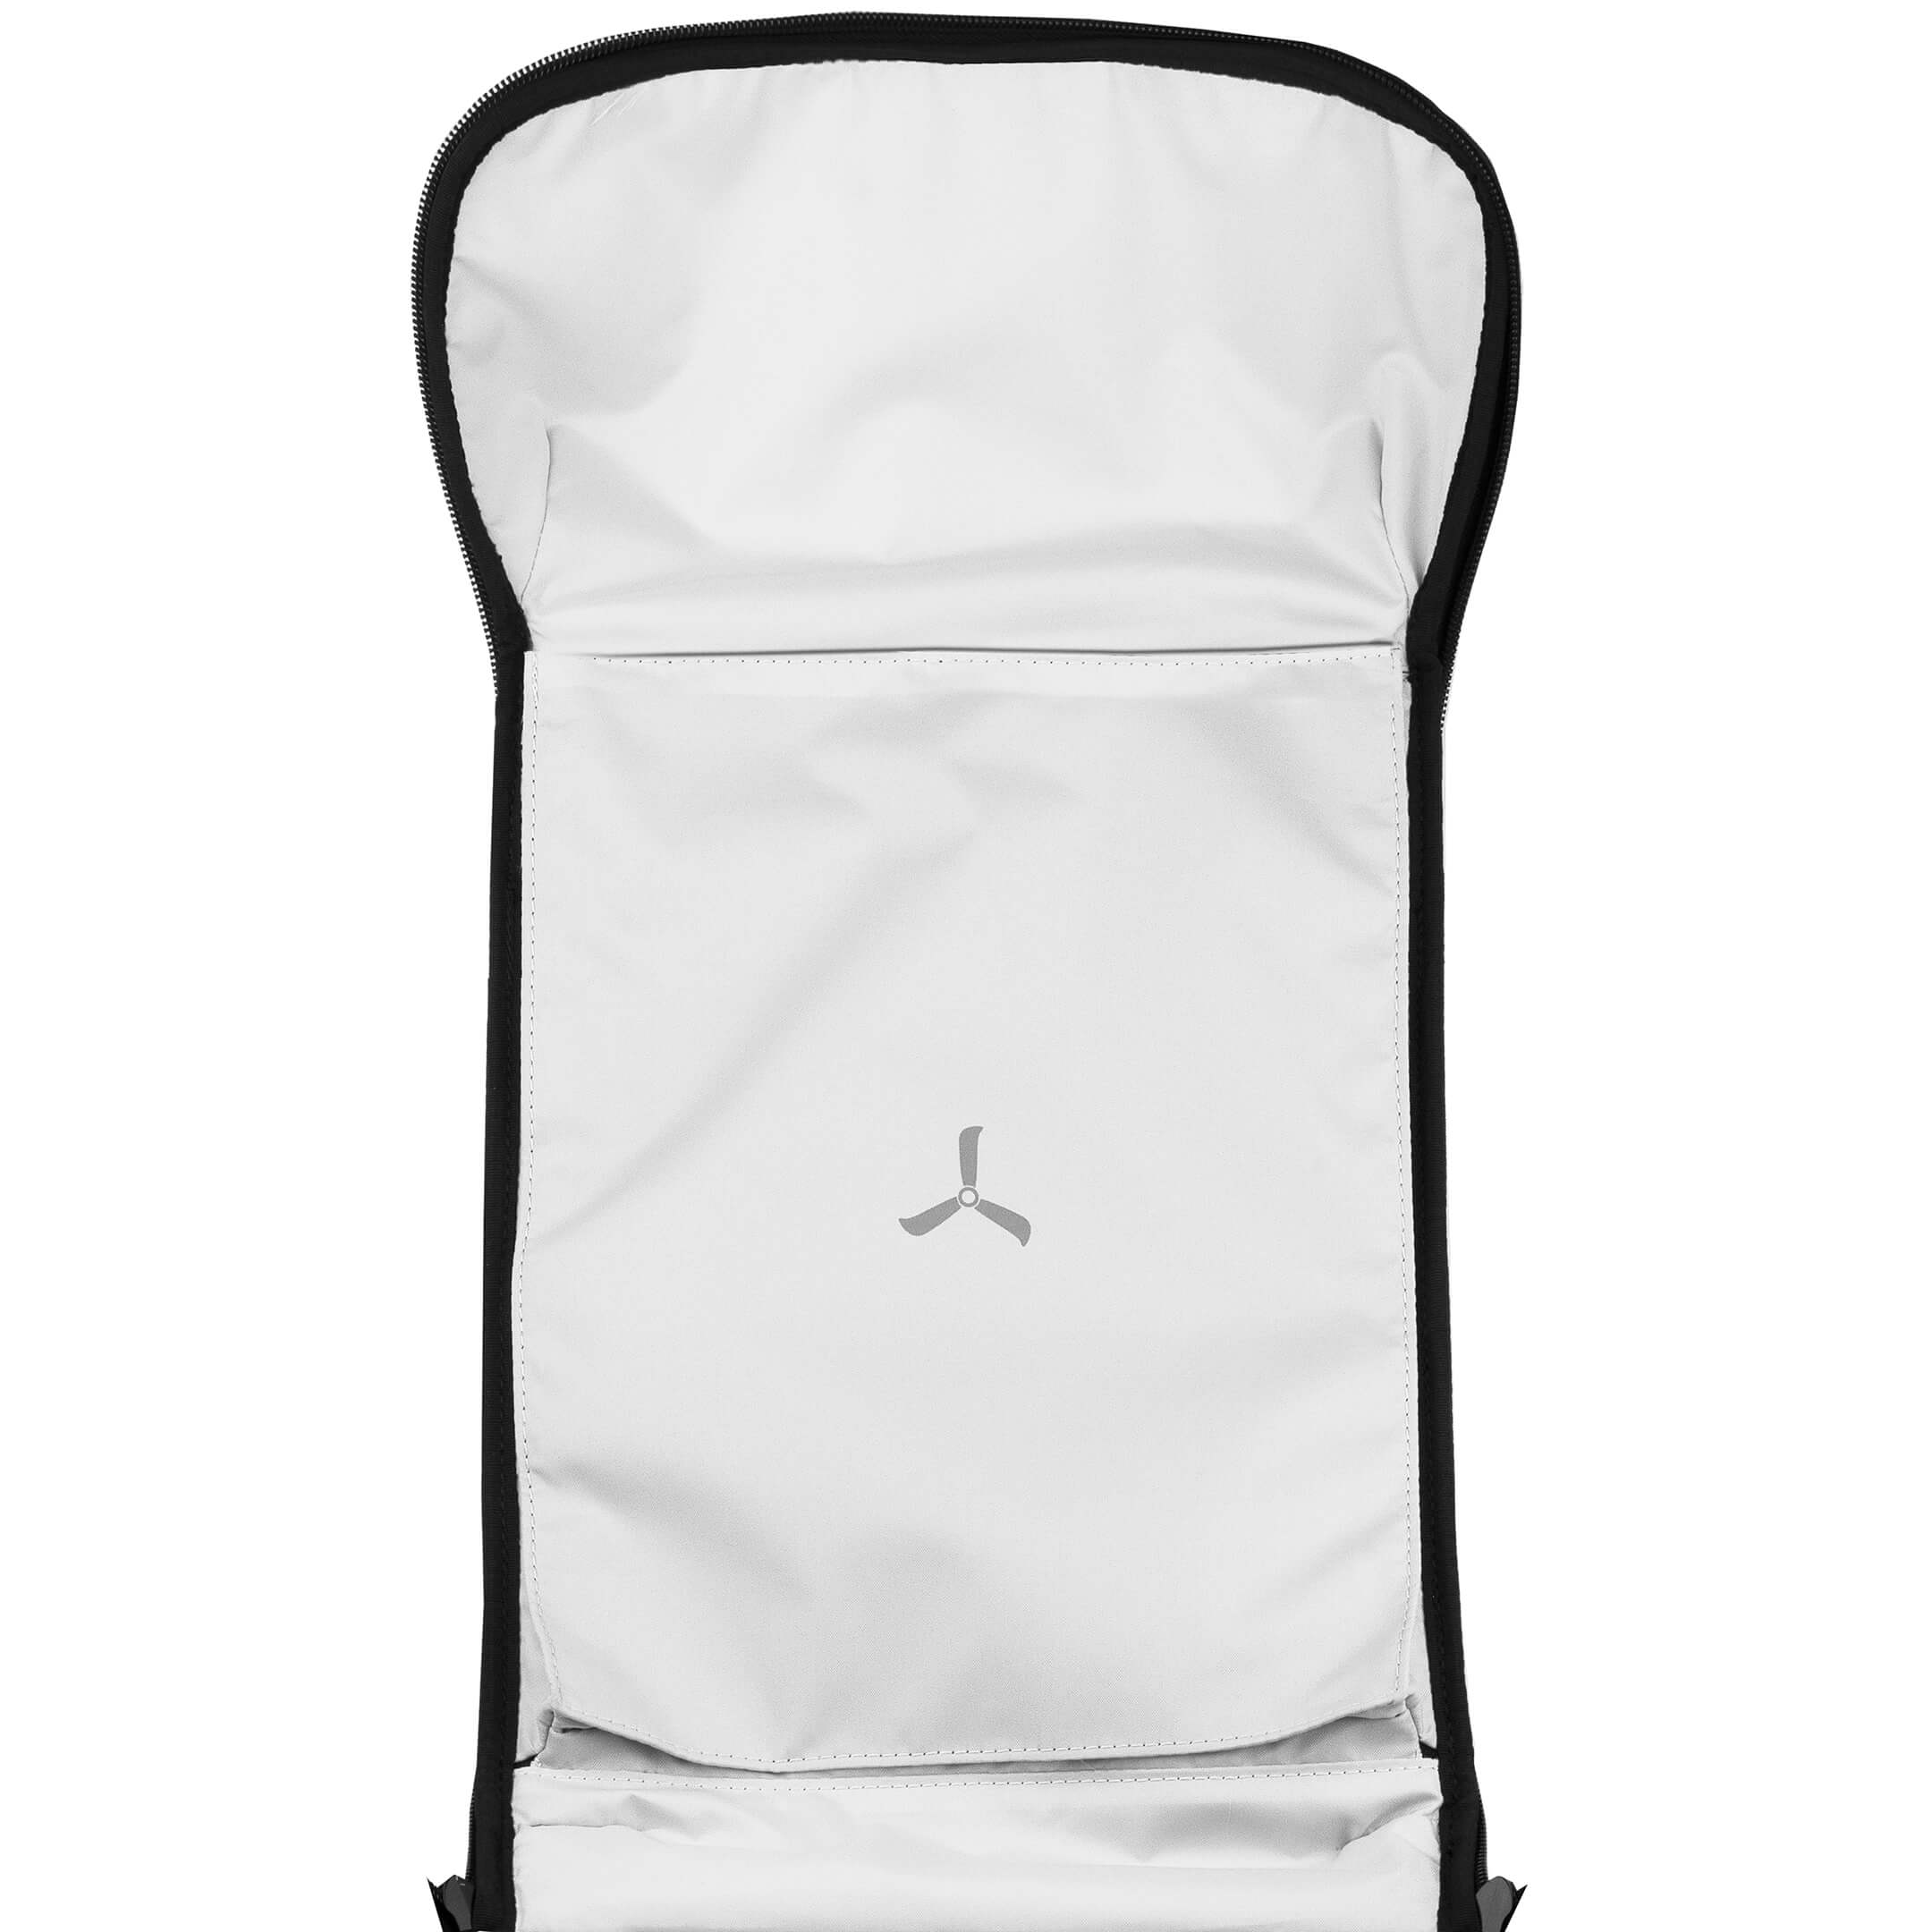 Urban Backpack - freestyle backpack